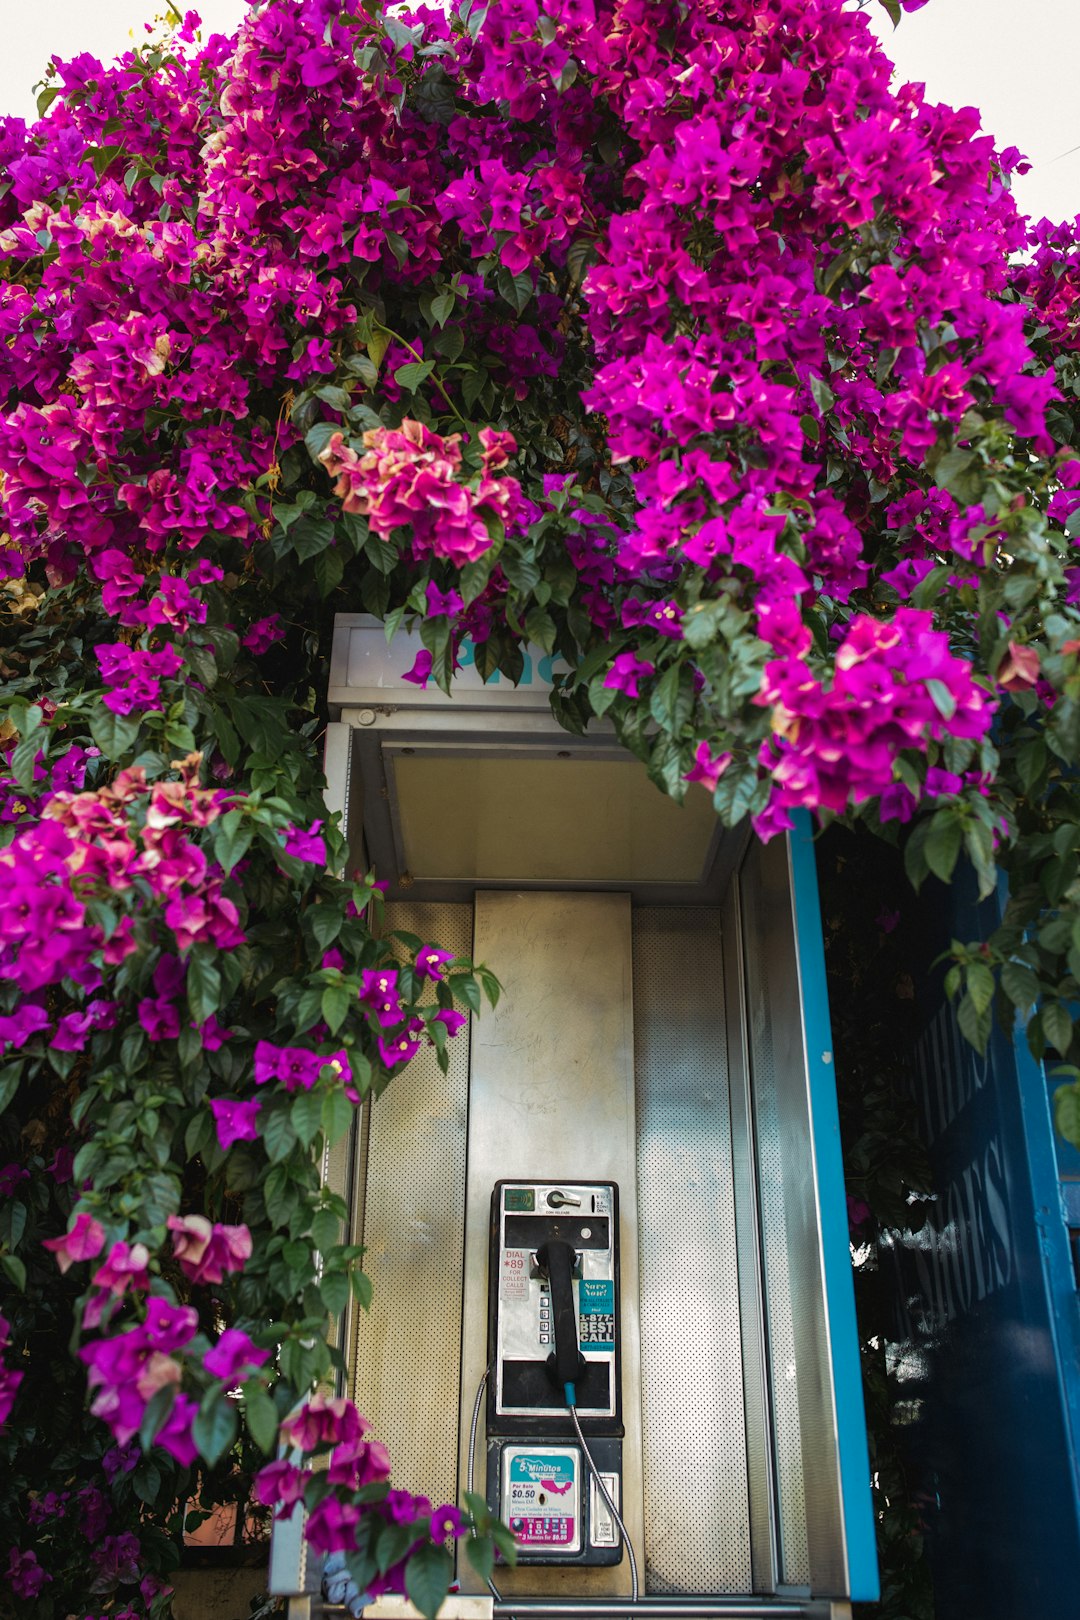 purple flowers near telephone booth